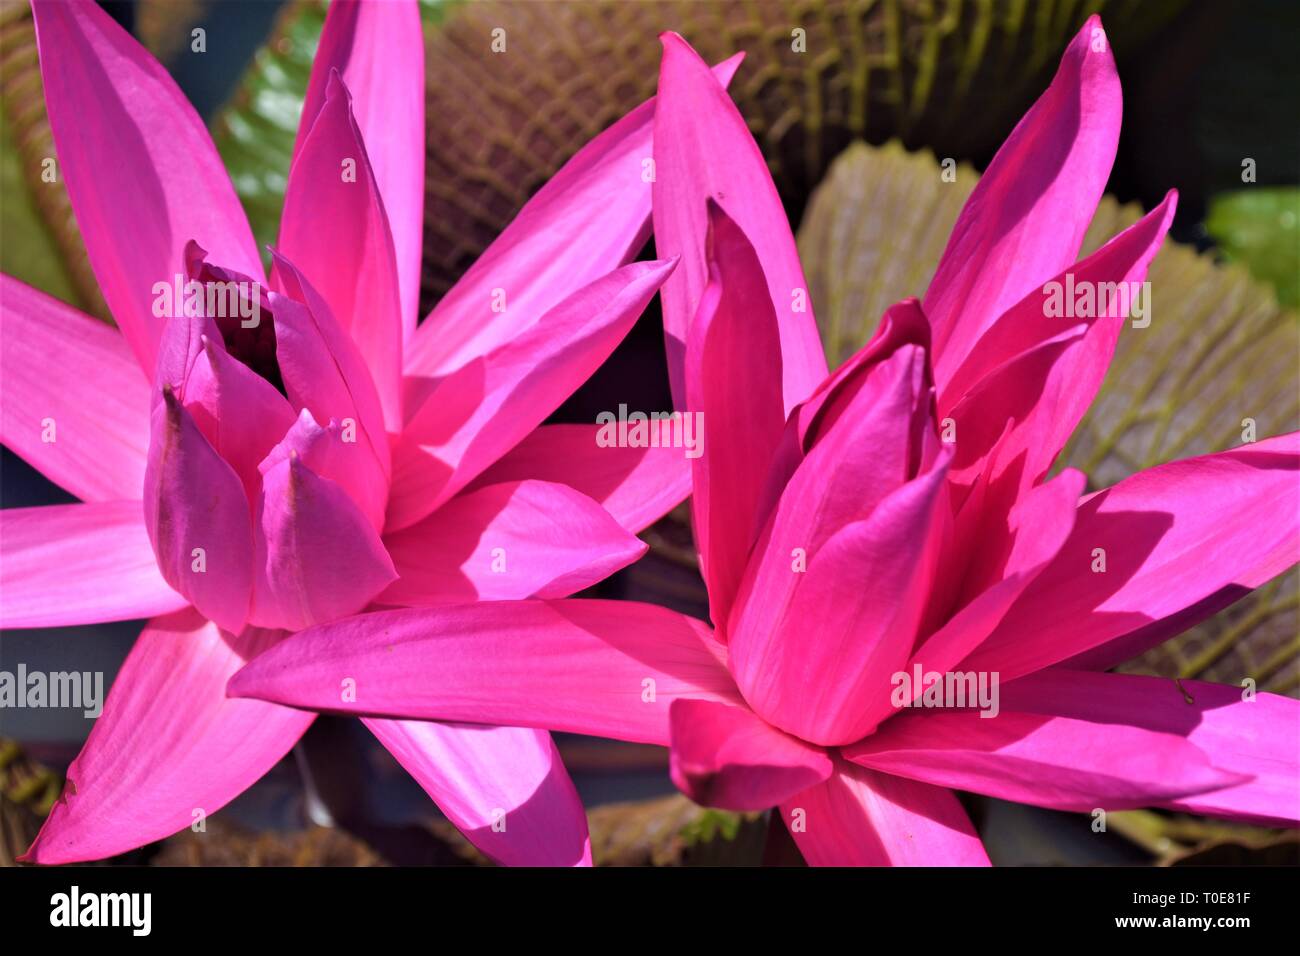 Close-up pink waterlily/lotus flowers. Stock Photo